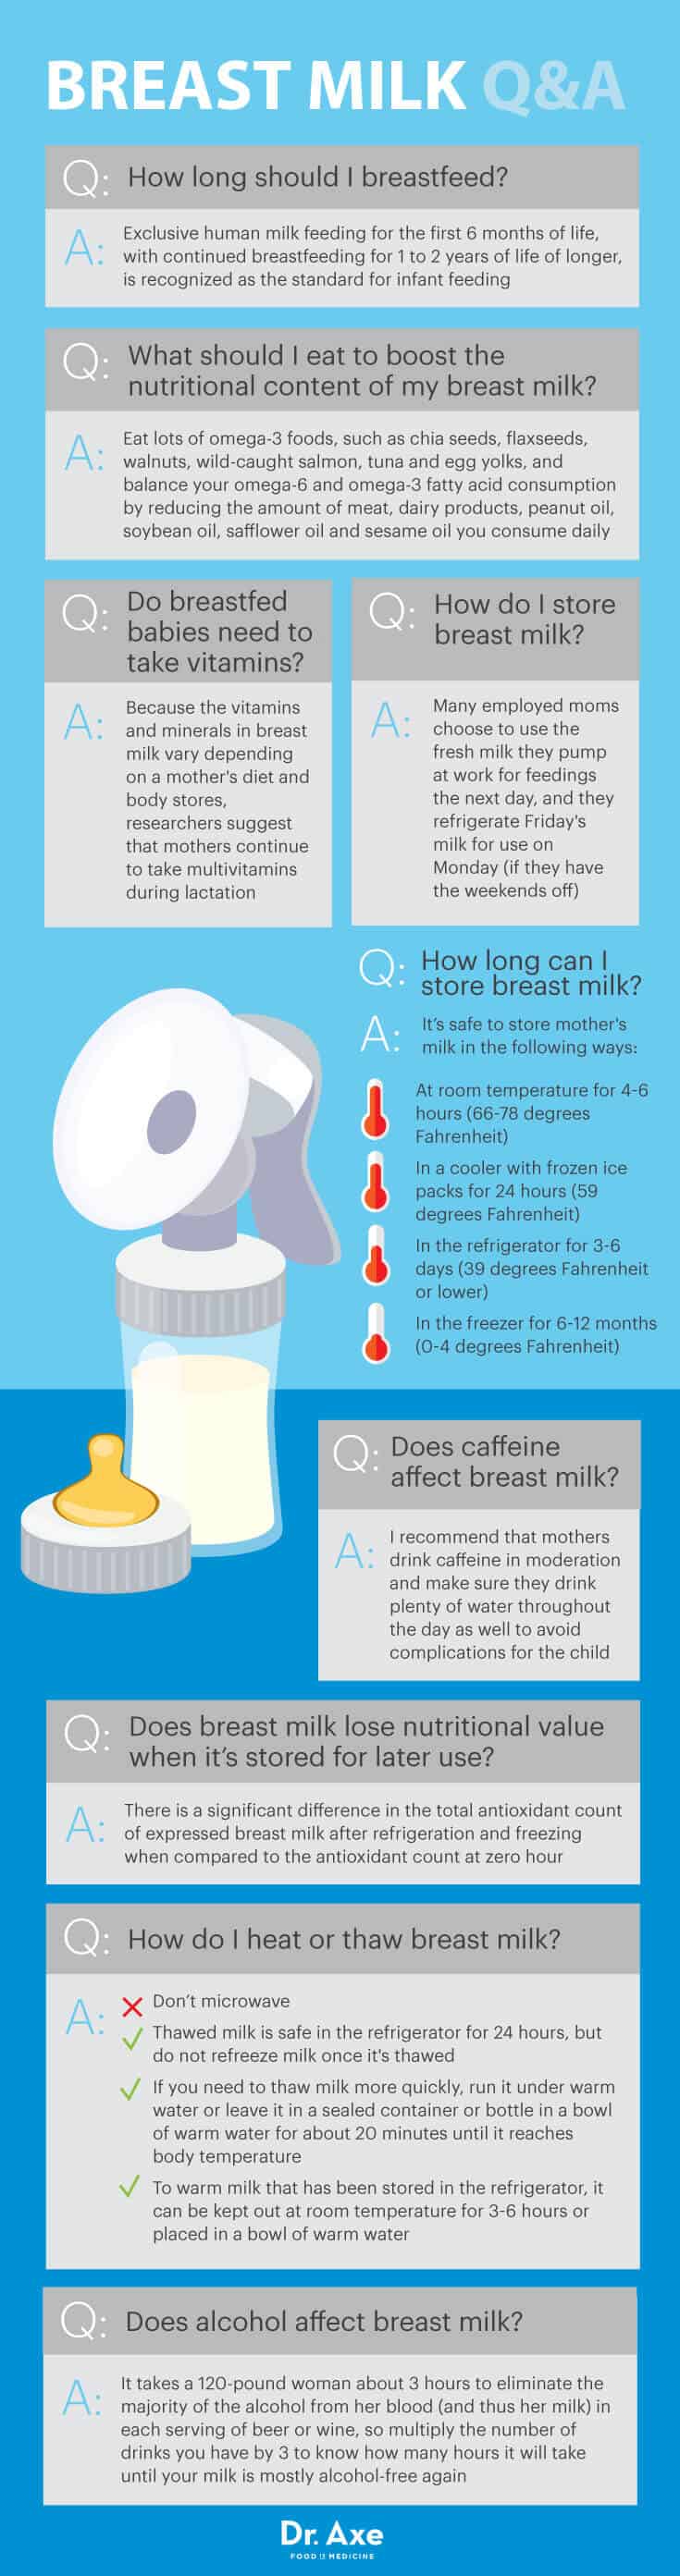 Breast milk Q&A - Dr. Axe